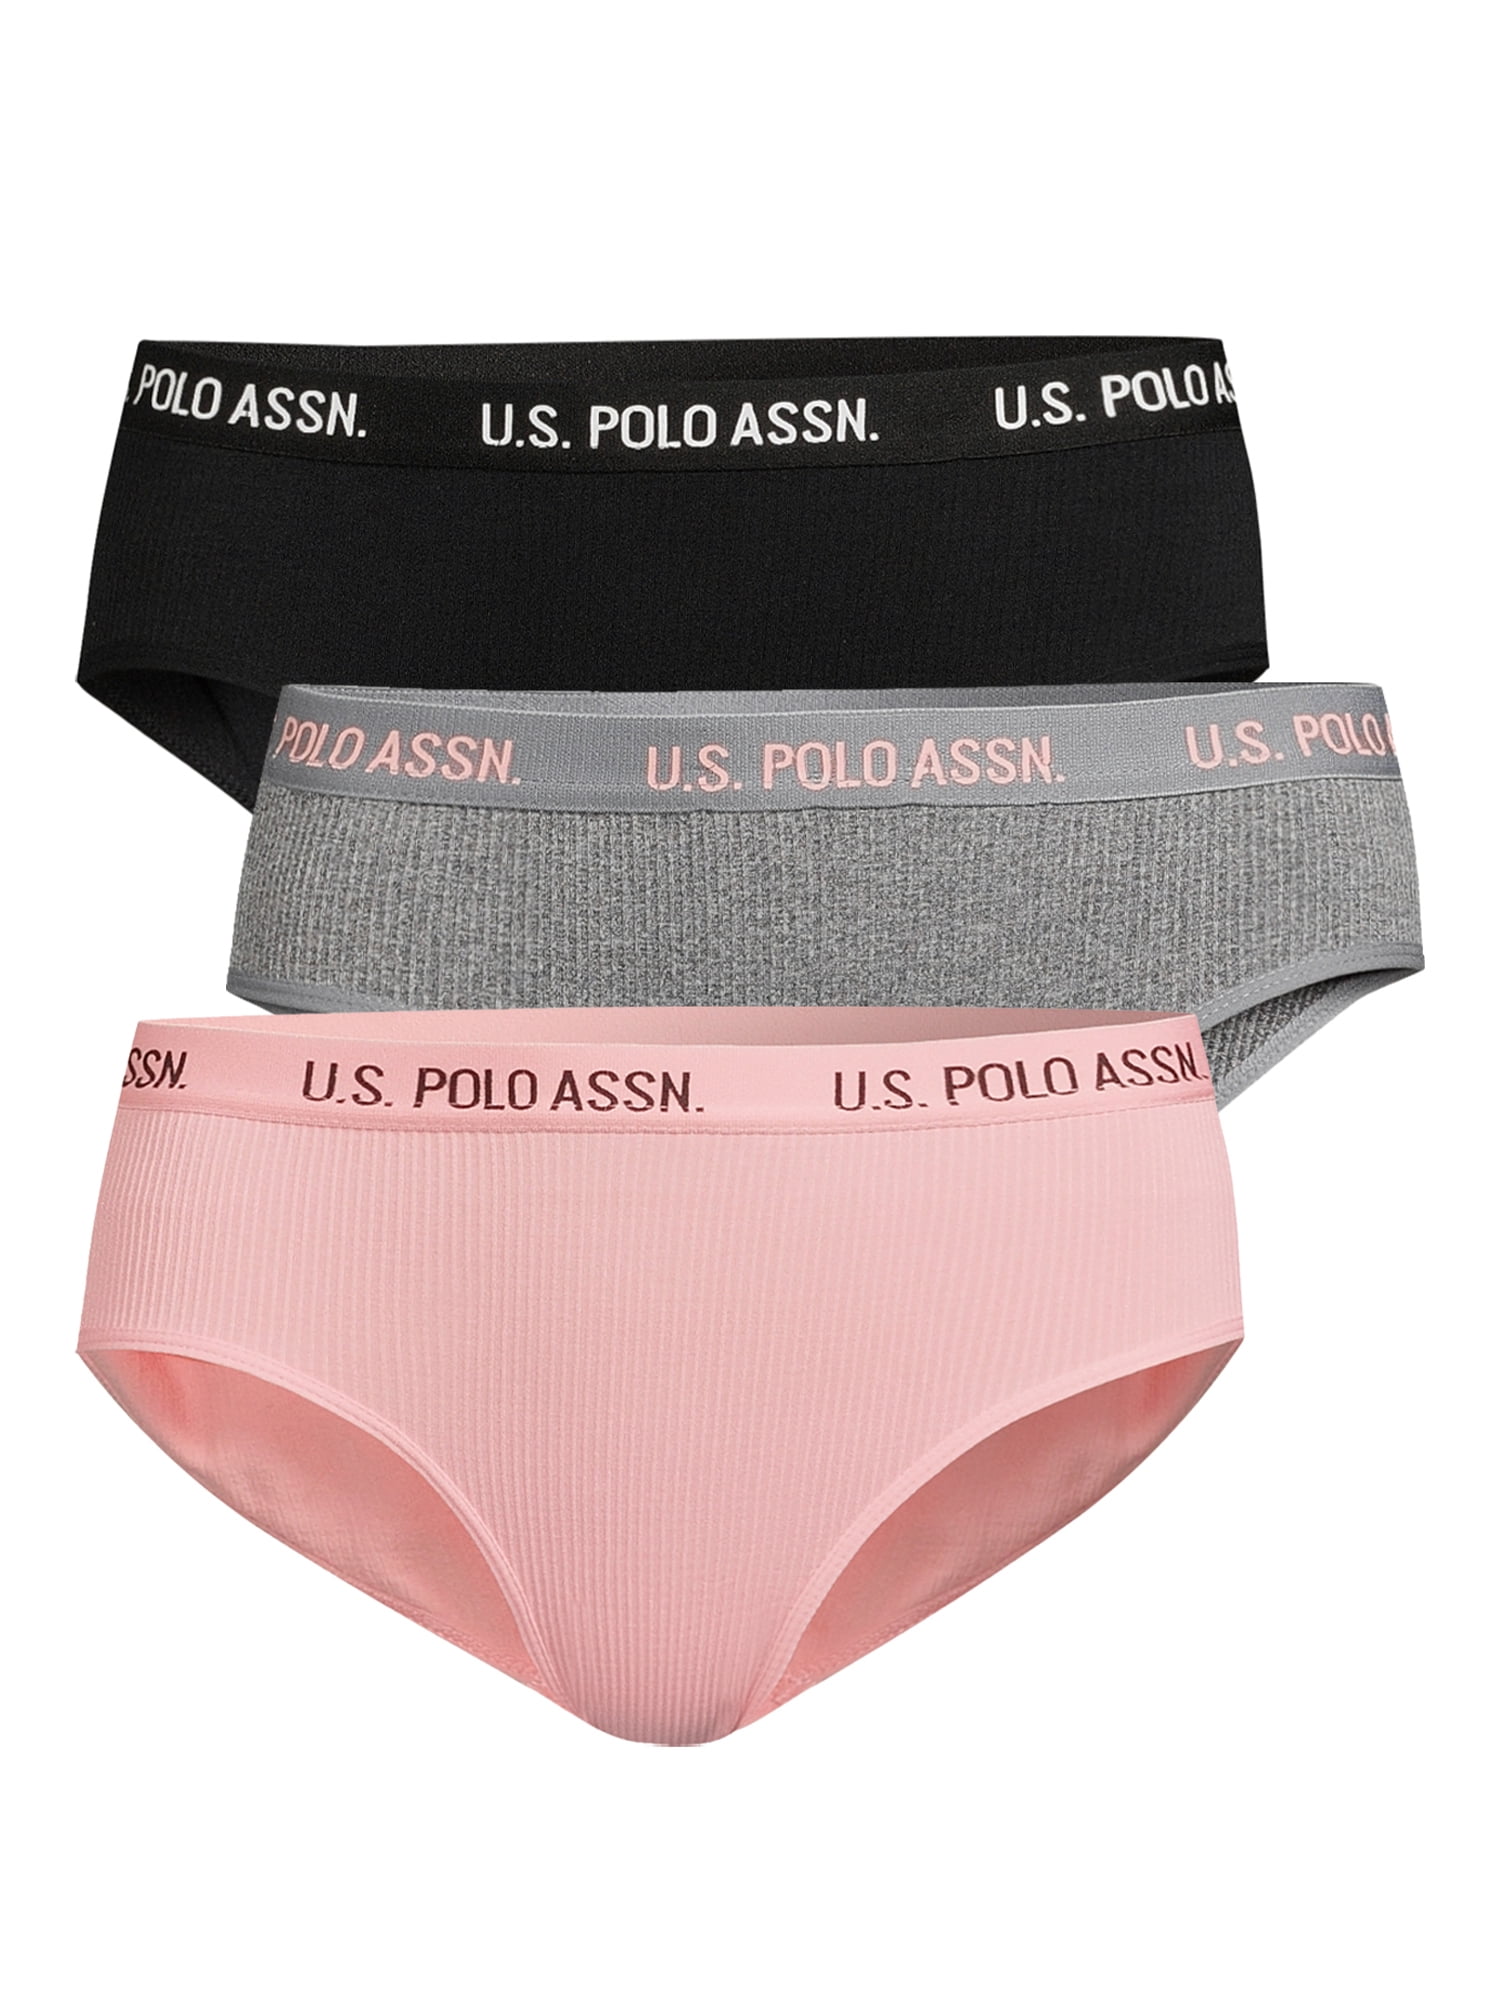 Polo Assn U.S Womens 3 Pack Seamless Hi Cut Elastic Waist Briefs Panties Set Charcoal Heather/Pink/Black X-Large 